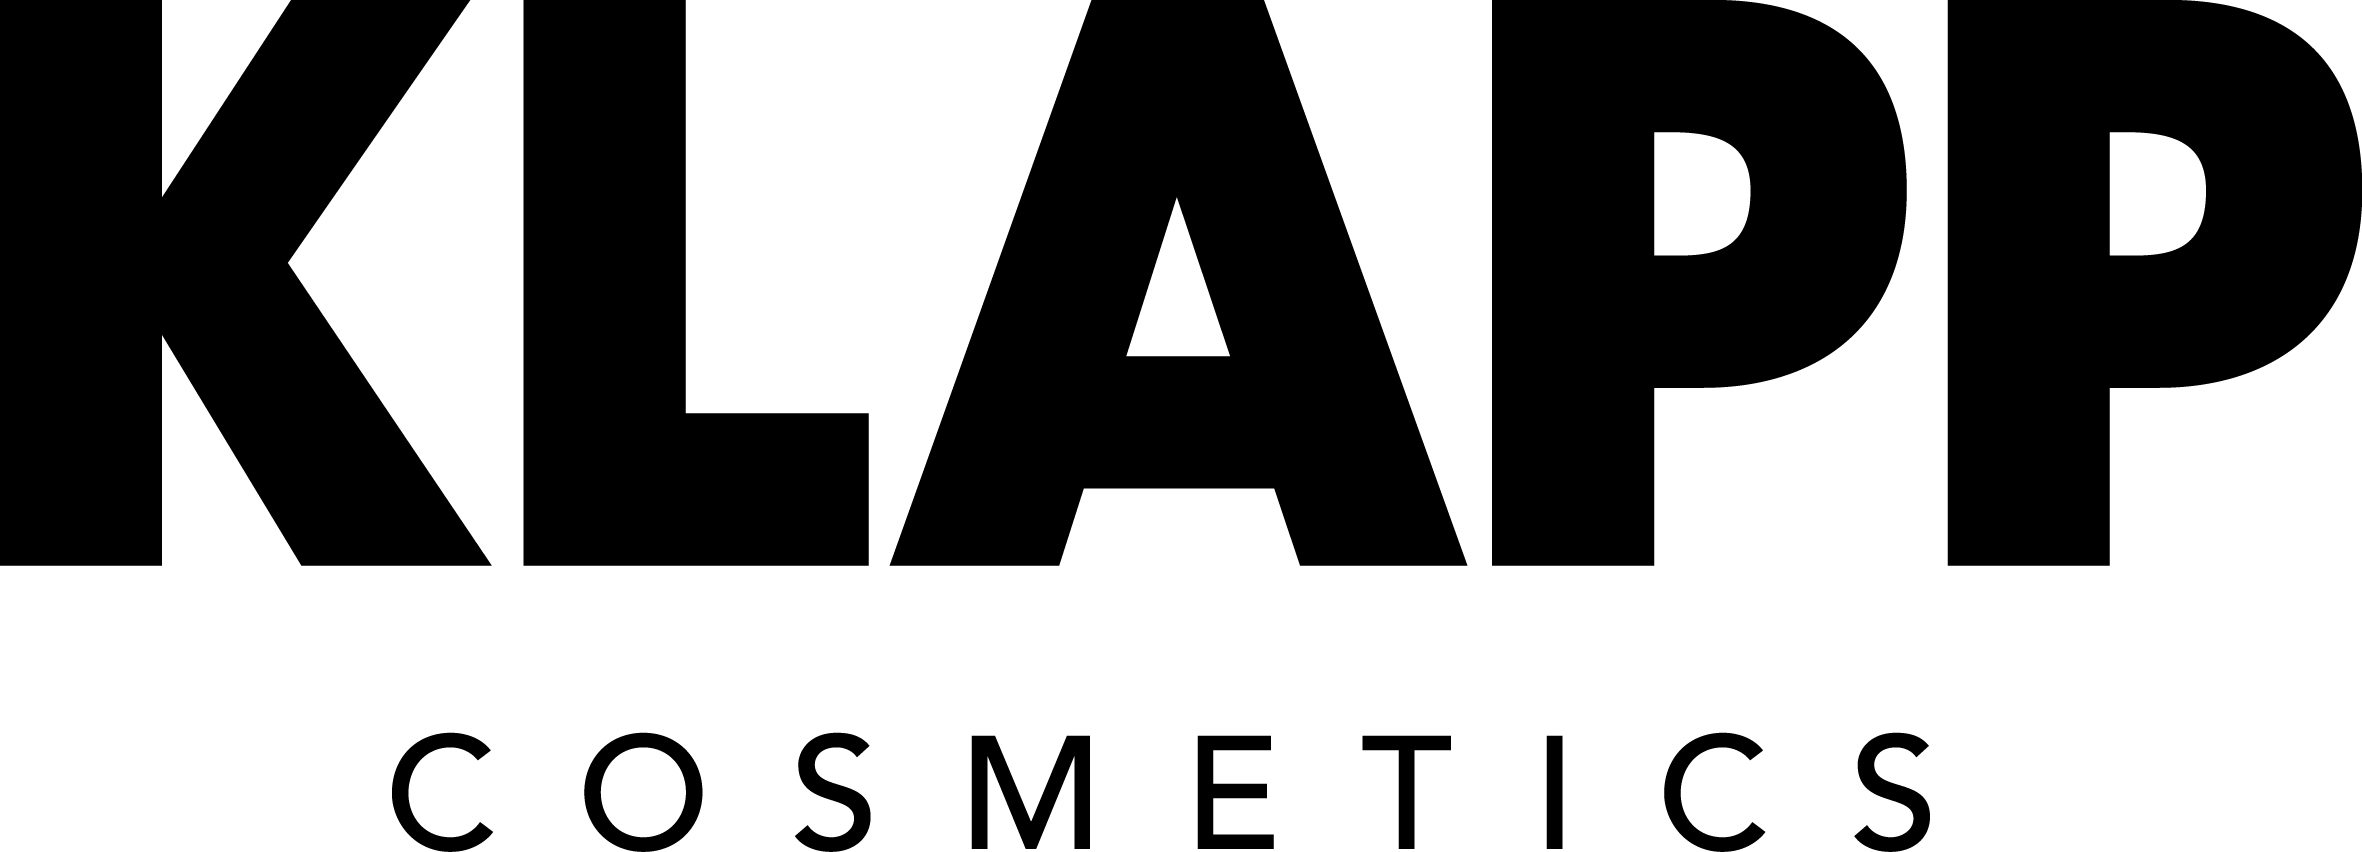 KLAPP_Cosmetics_Logo 2